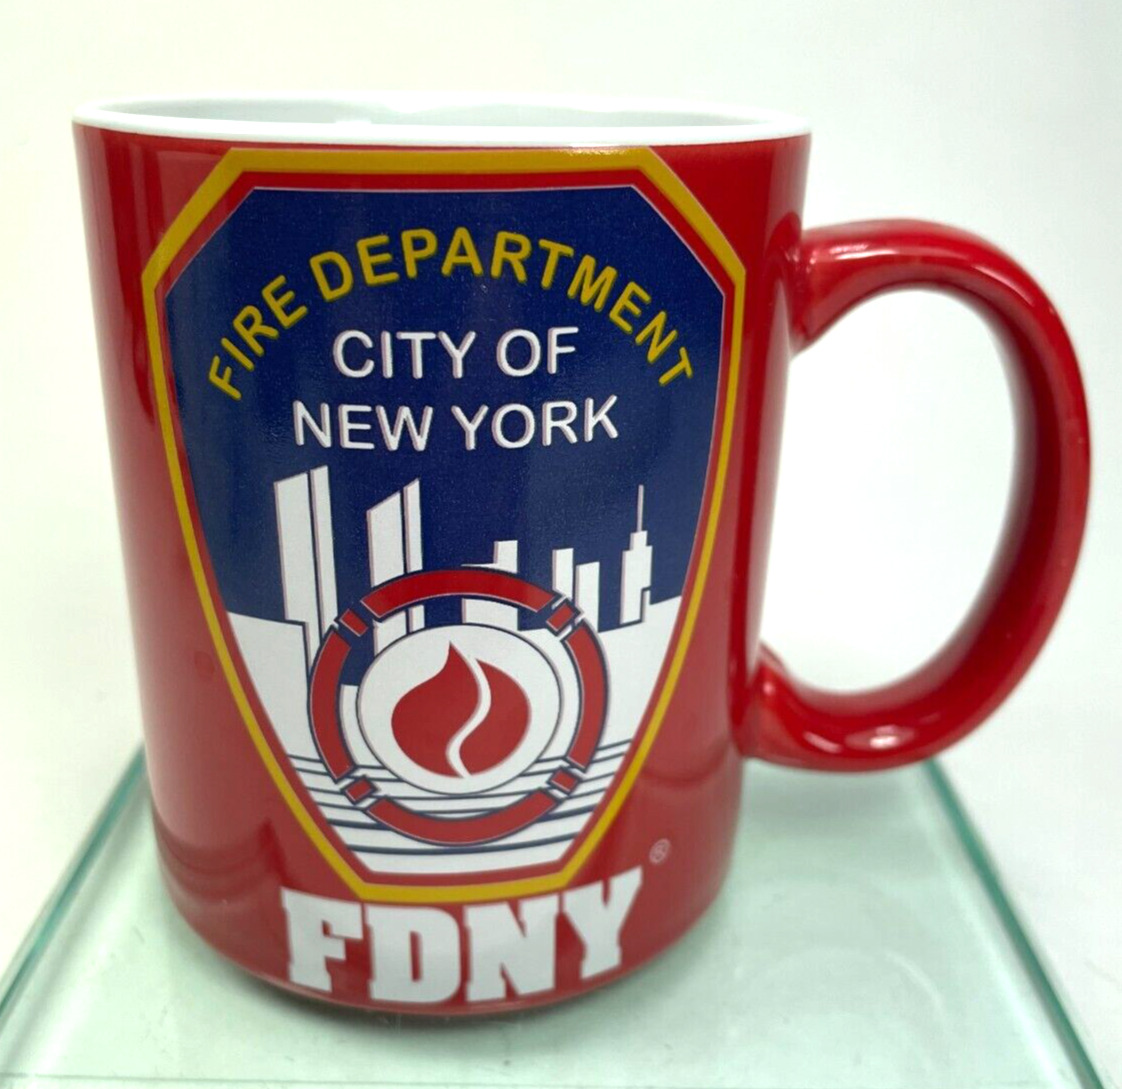 FDNY Fire Department City of New York Coffee Mug 2008 12 oz Official Souvenir B6